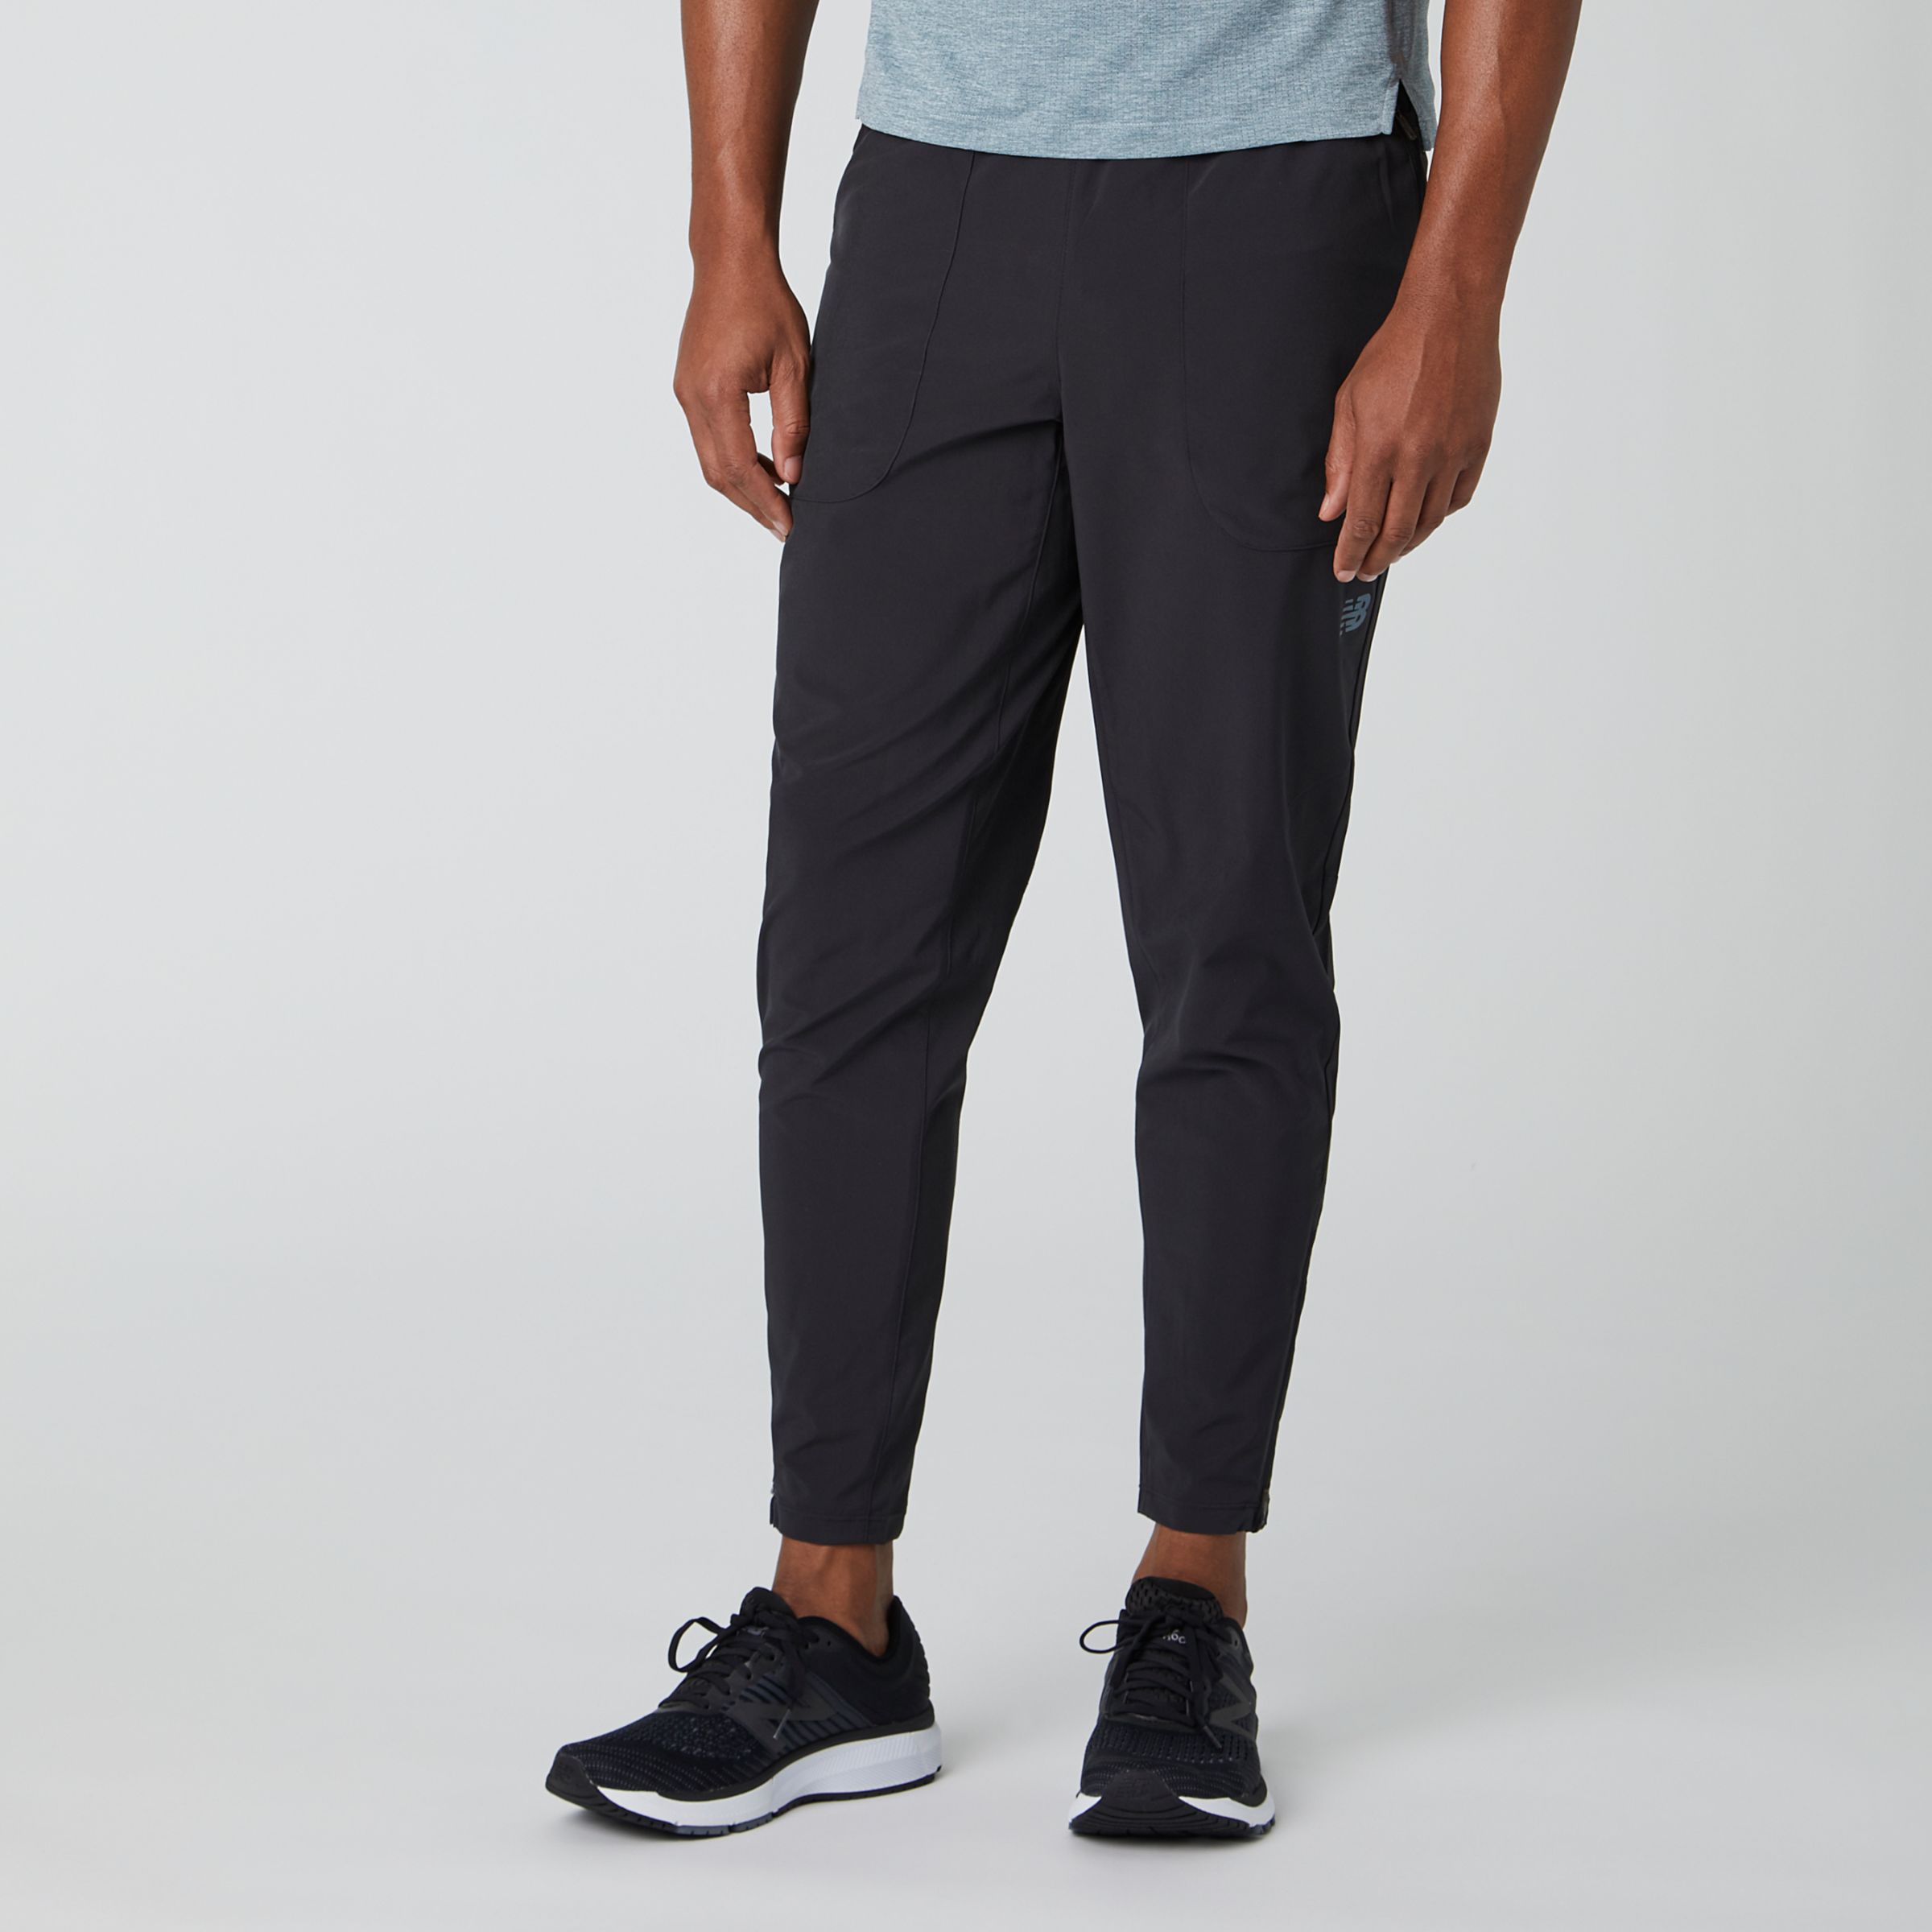 Athletic & Running Pants for Men - New Balance